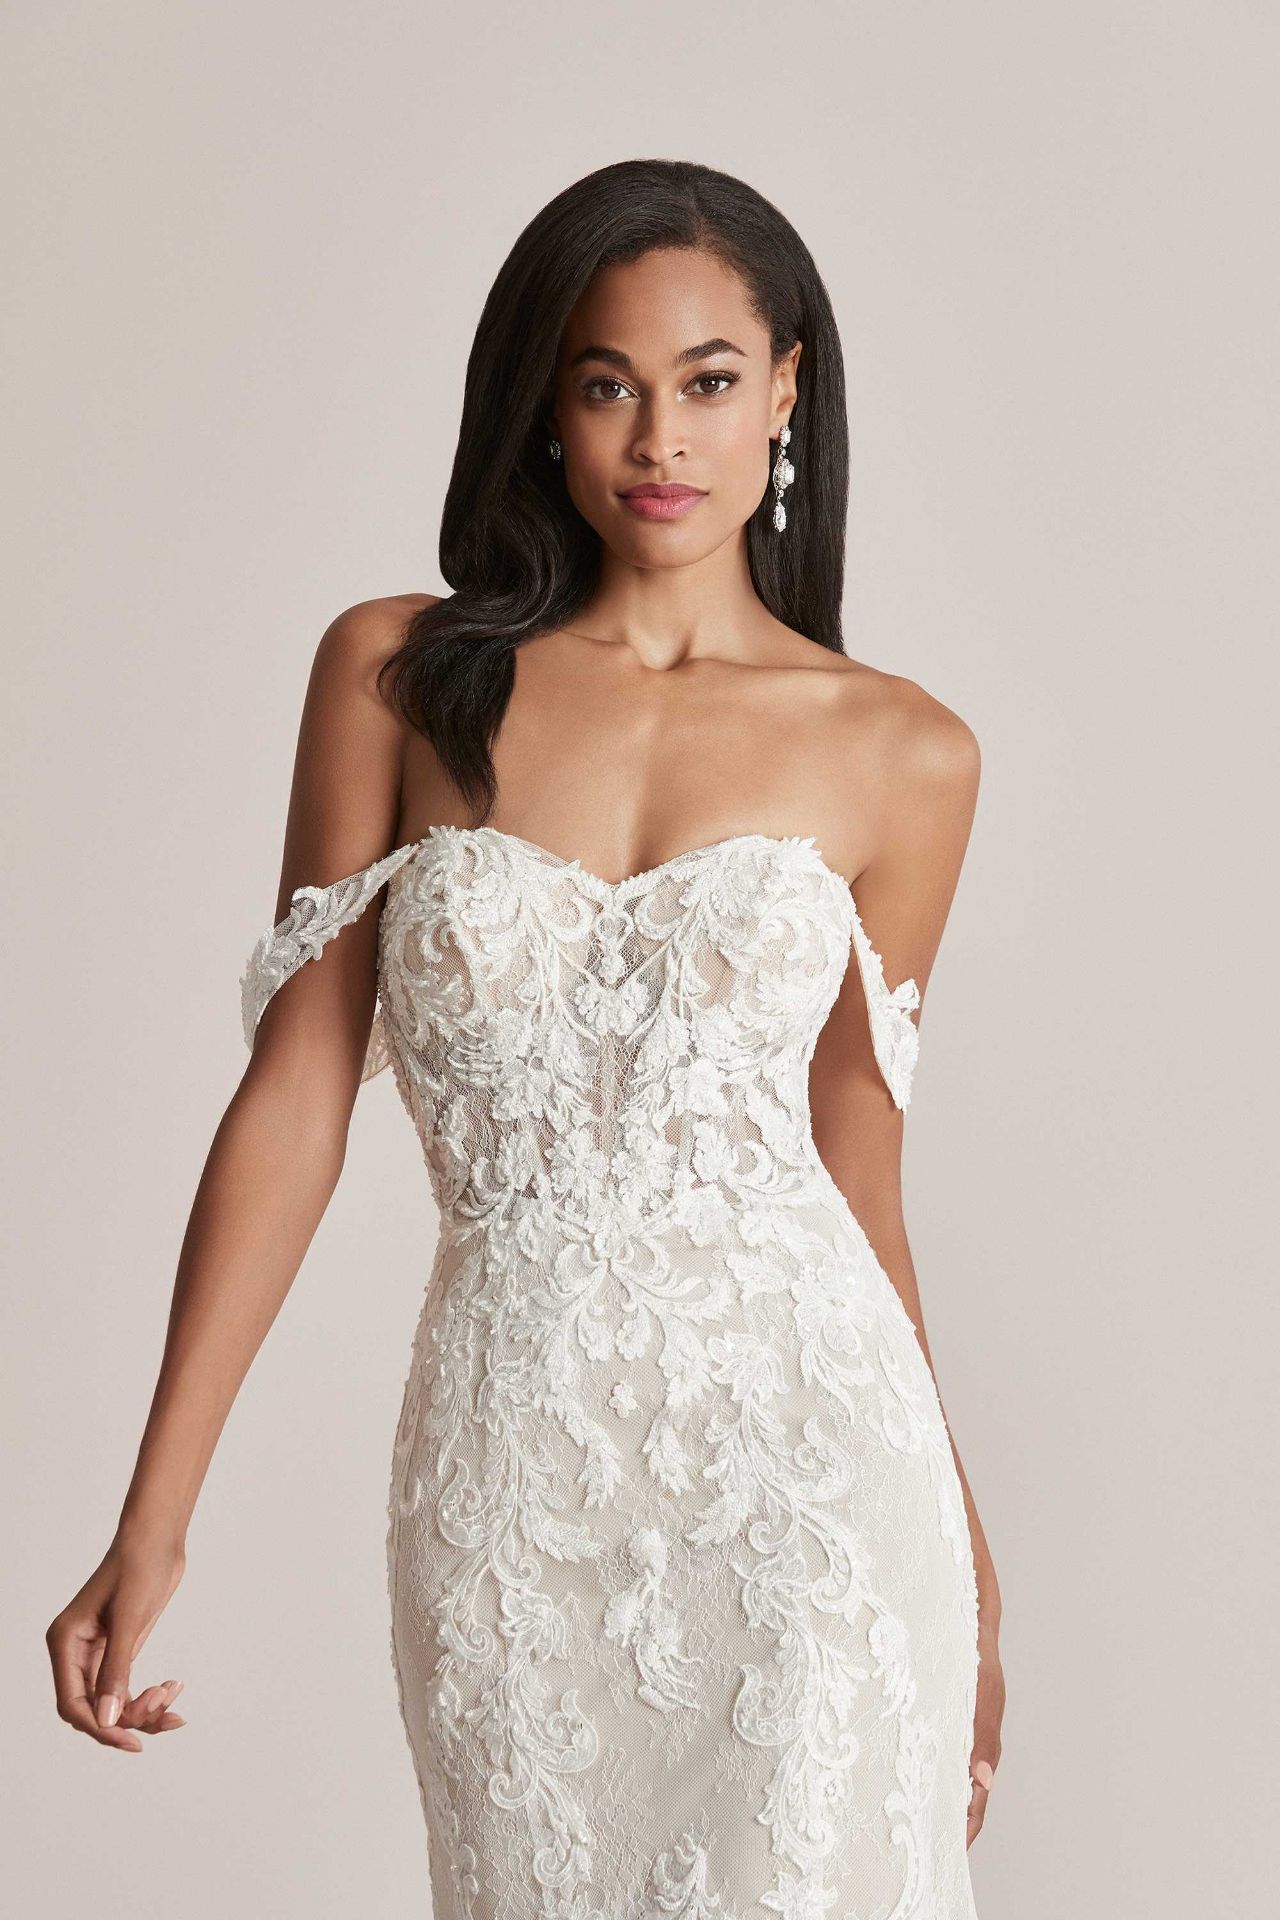 1 x Justin Alexander 'Caela' Off-The-Shoulder Lace Fit Wedding Dress - UK Size 10 - RRP £1,750 - Image 3 of 4